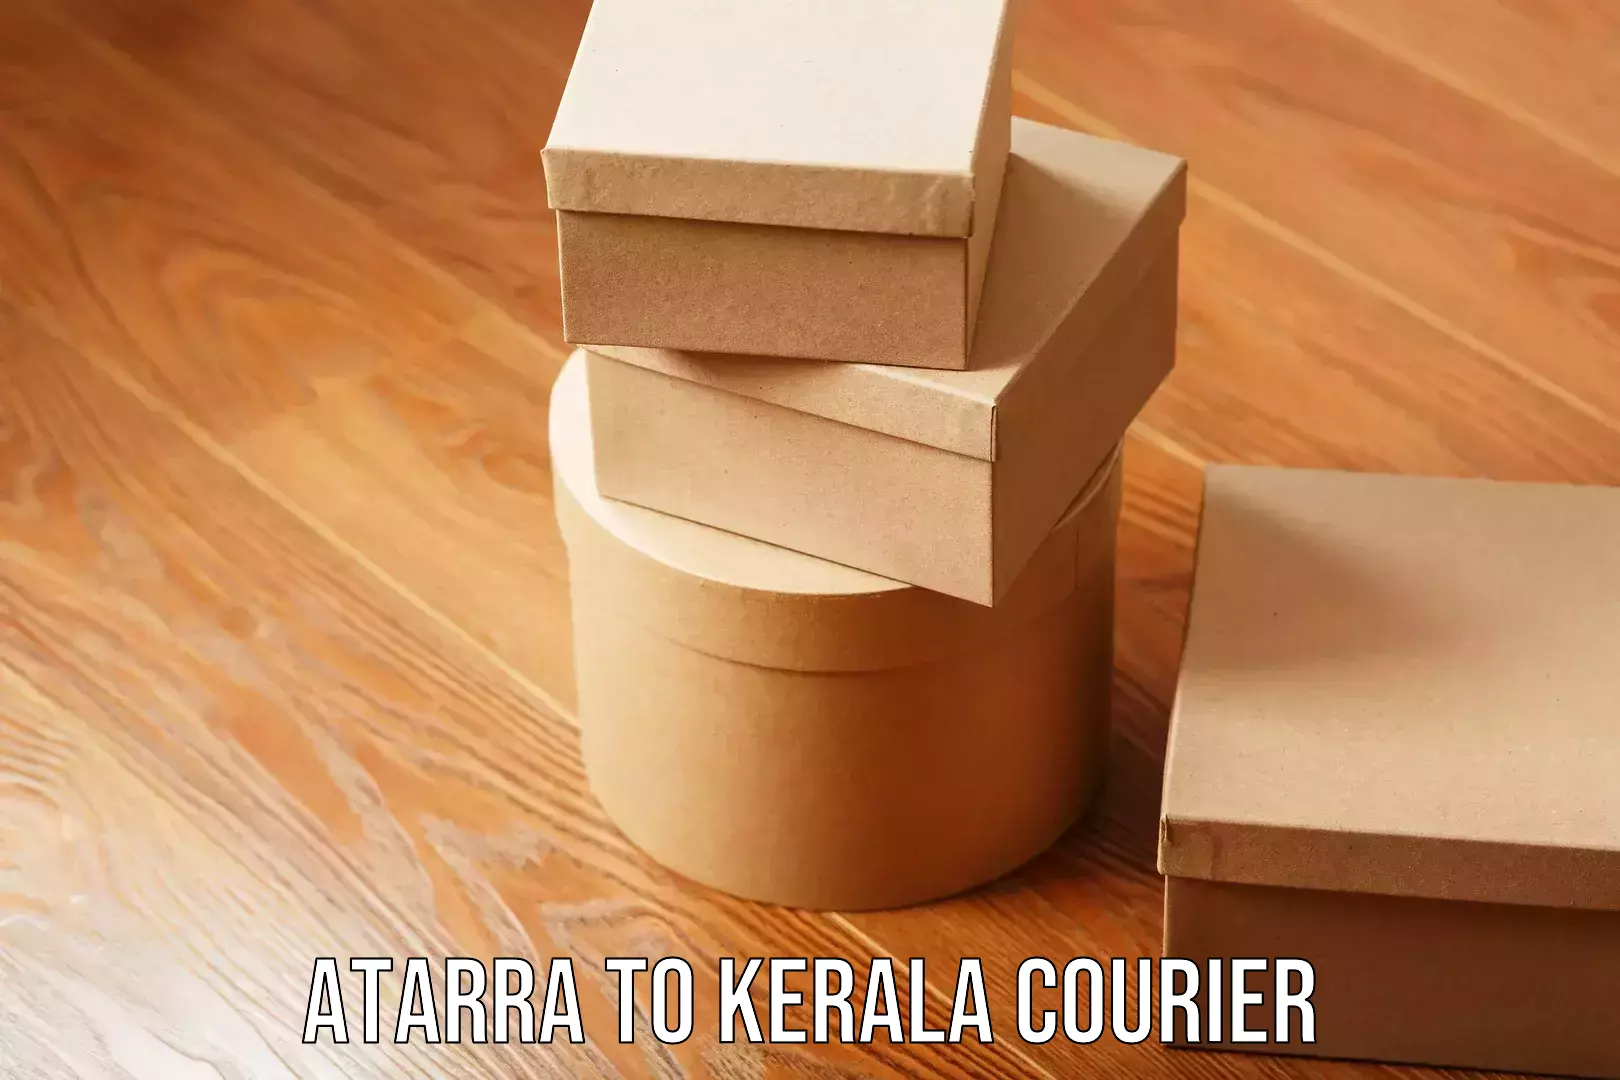 Express delivery capabilities Atarra to Kerala